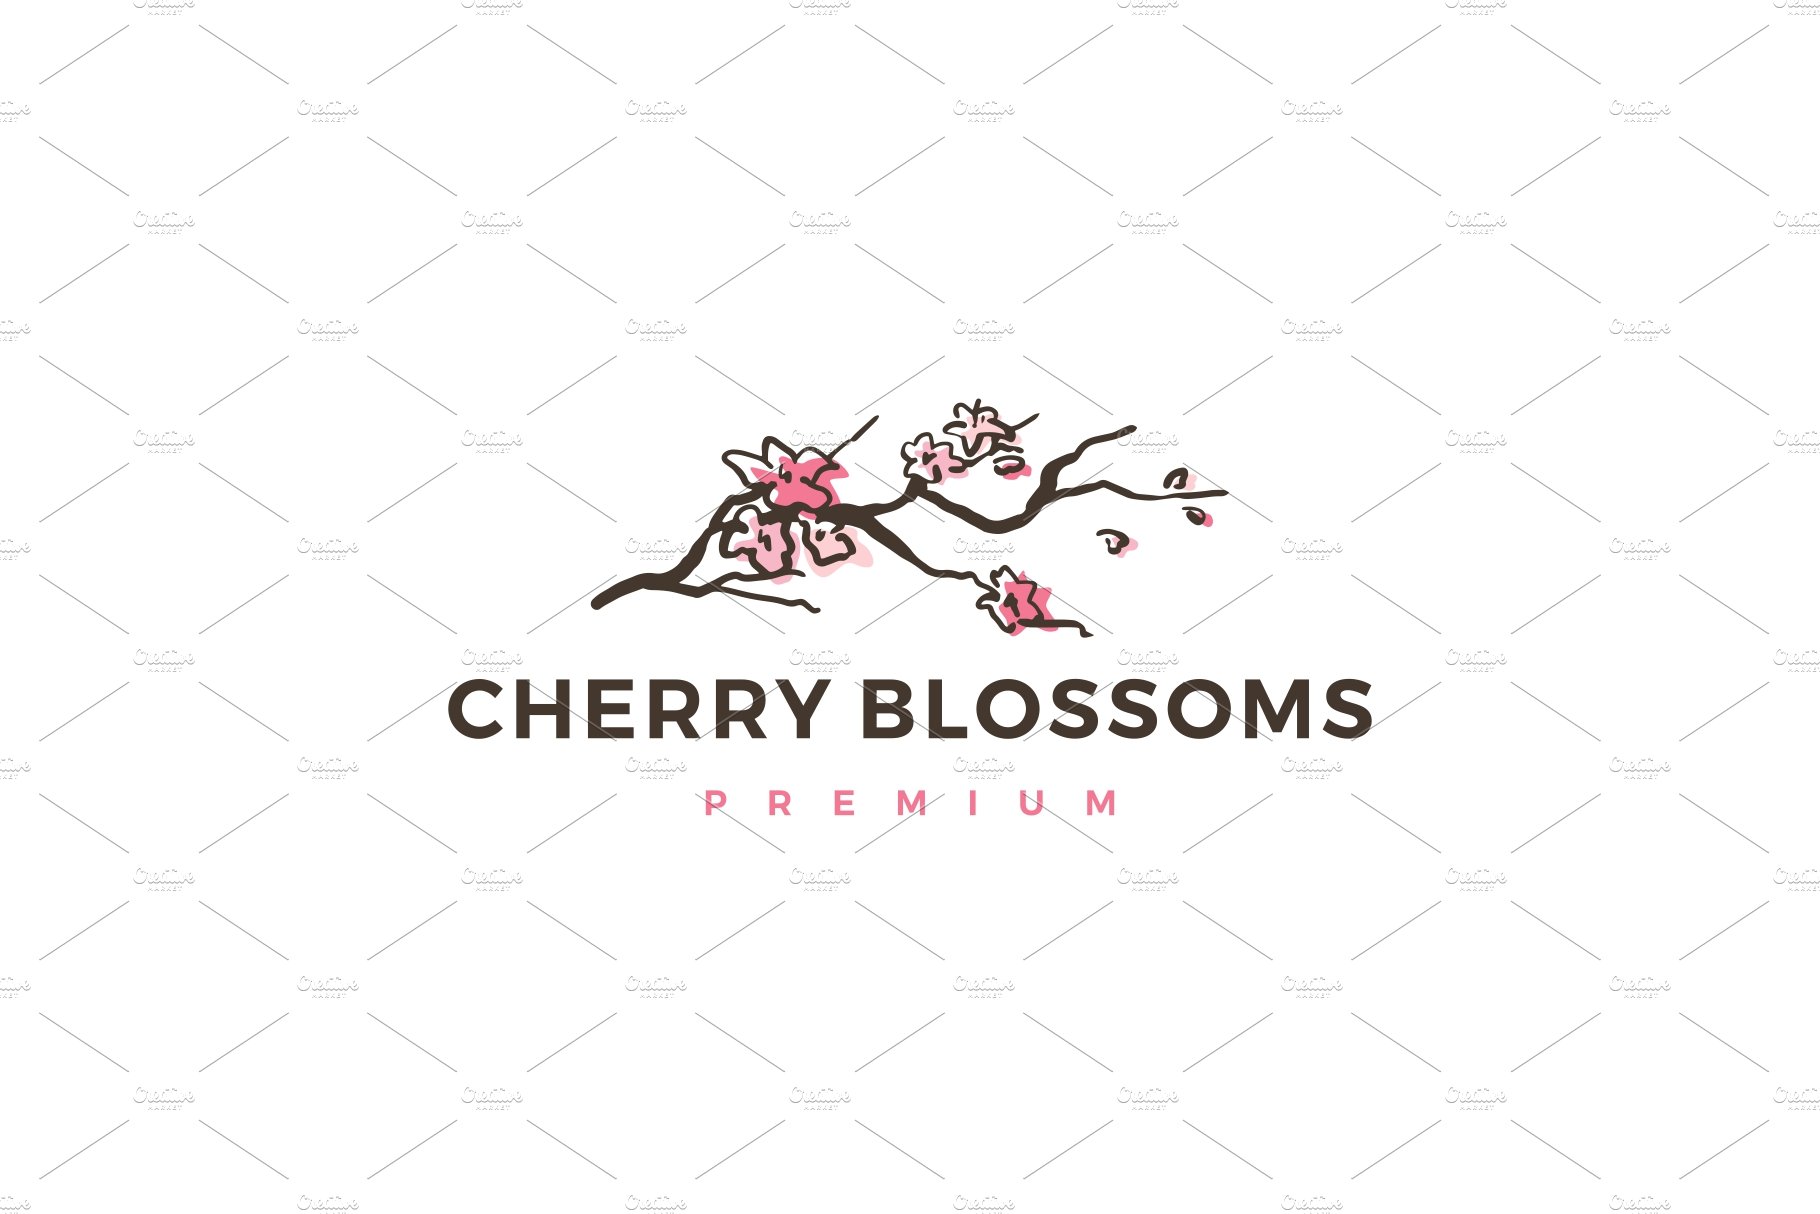 cherry blossom logo vector icon cover image.